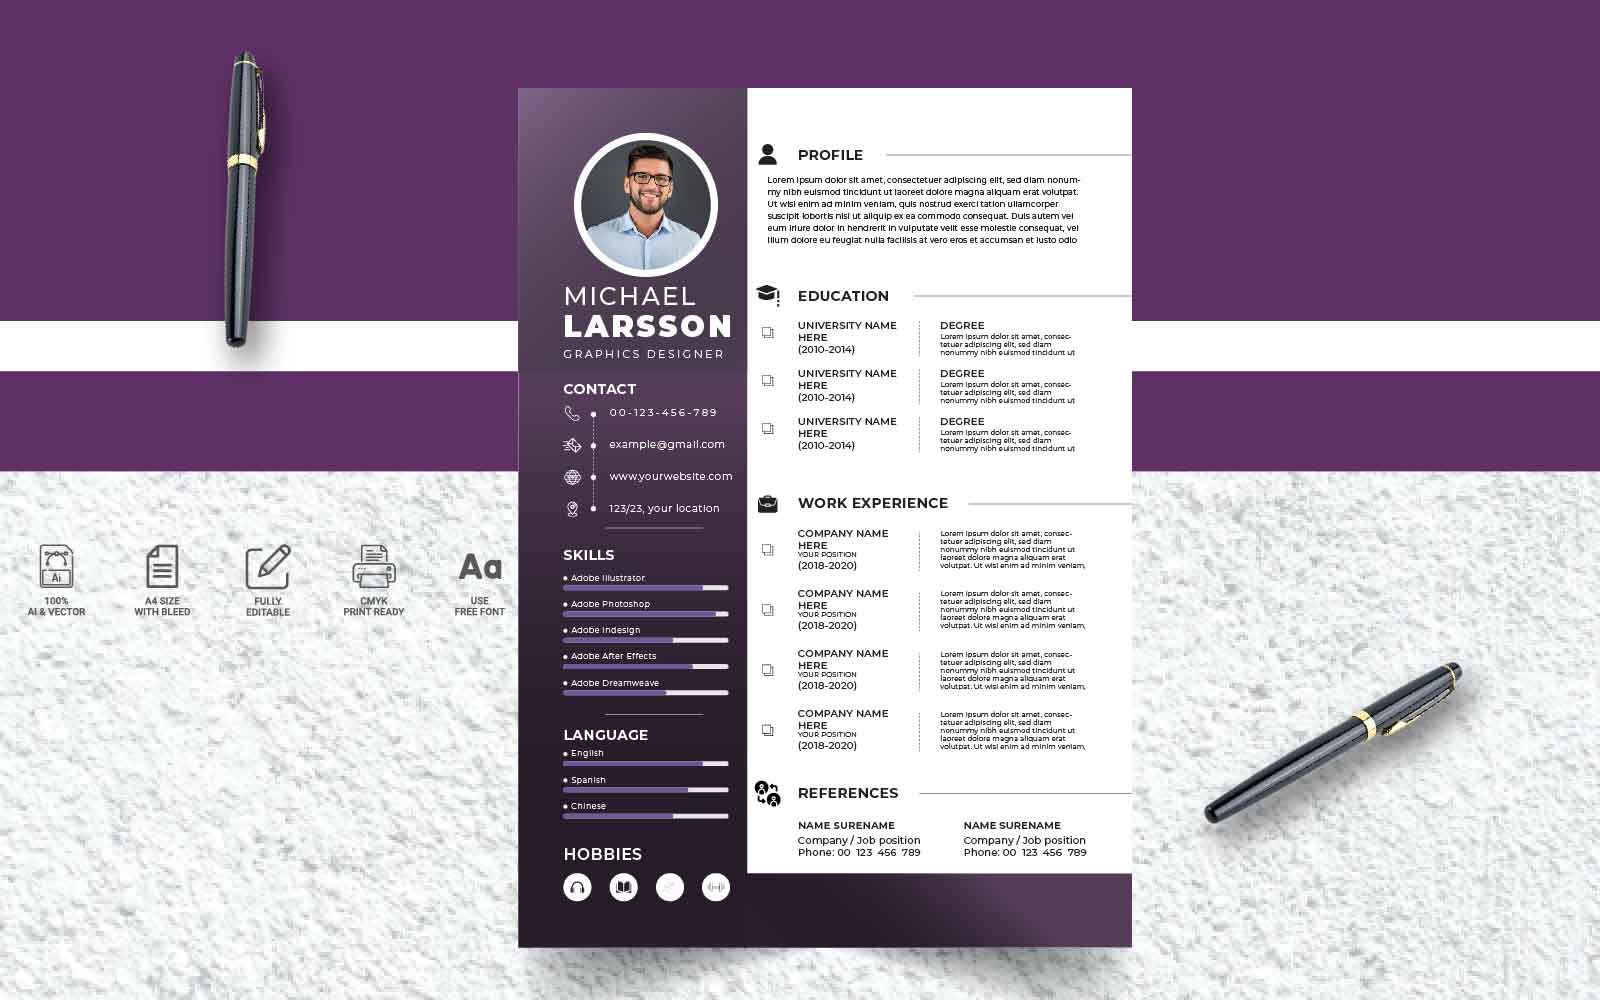 Michael Larsson CV/Resume Template Design